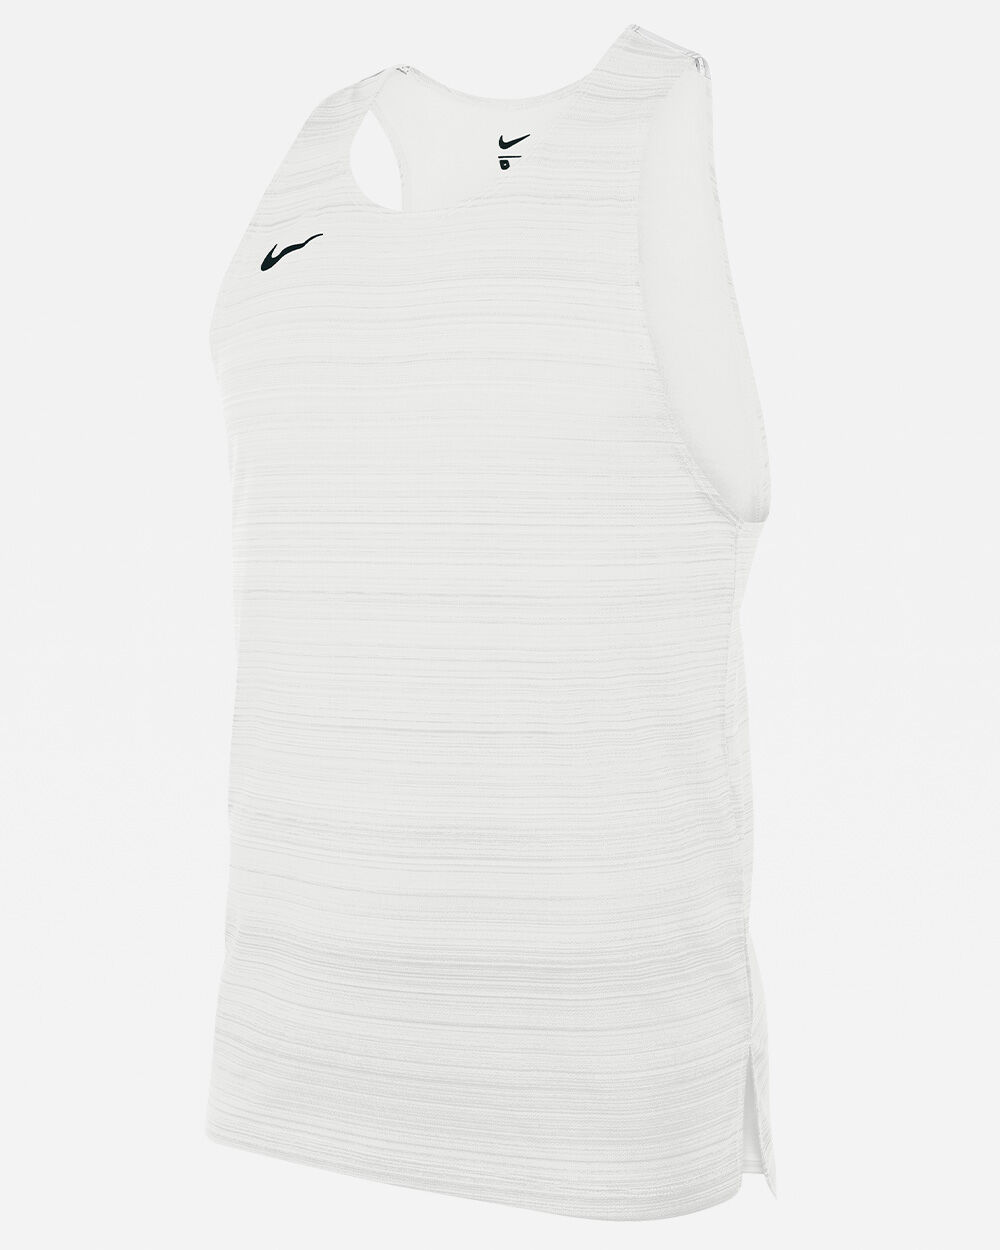 Nike Canotta da running Stock Bianco Uomo NT0300-100 XL